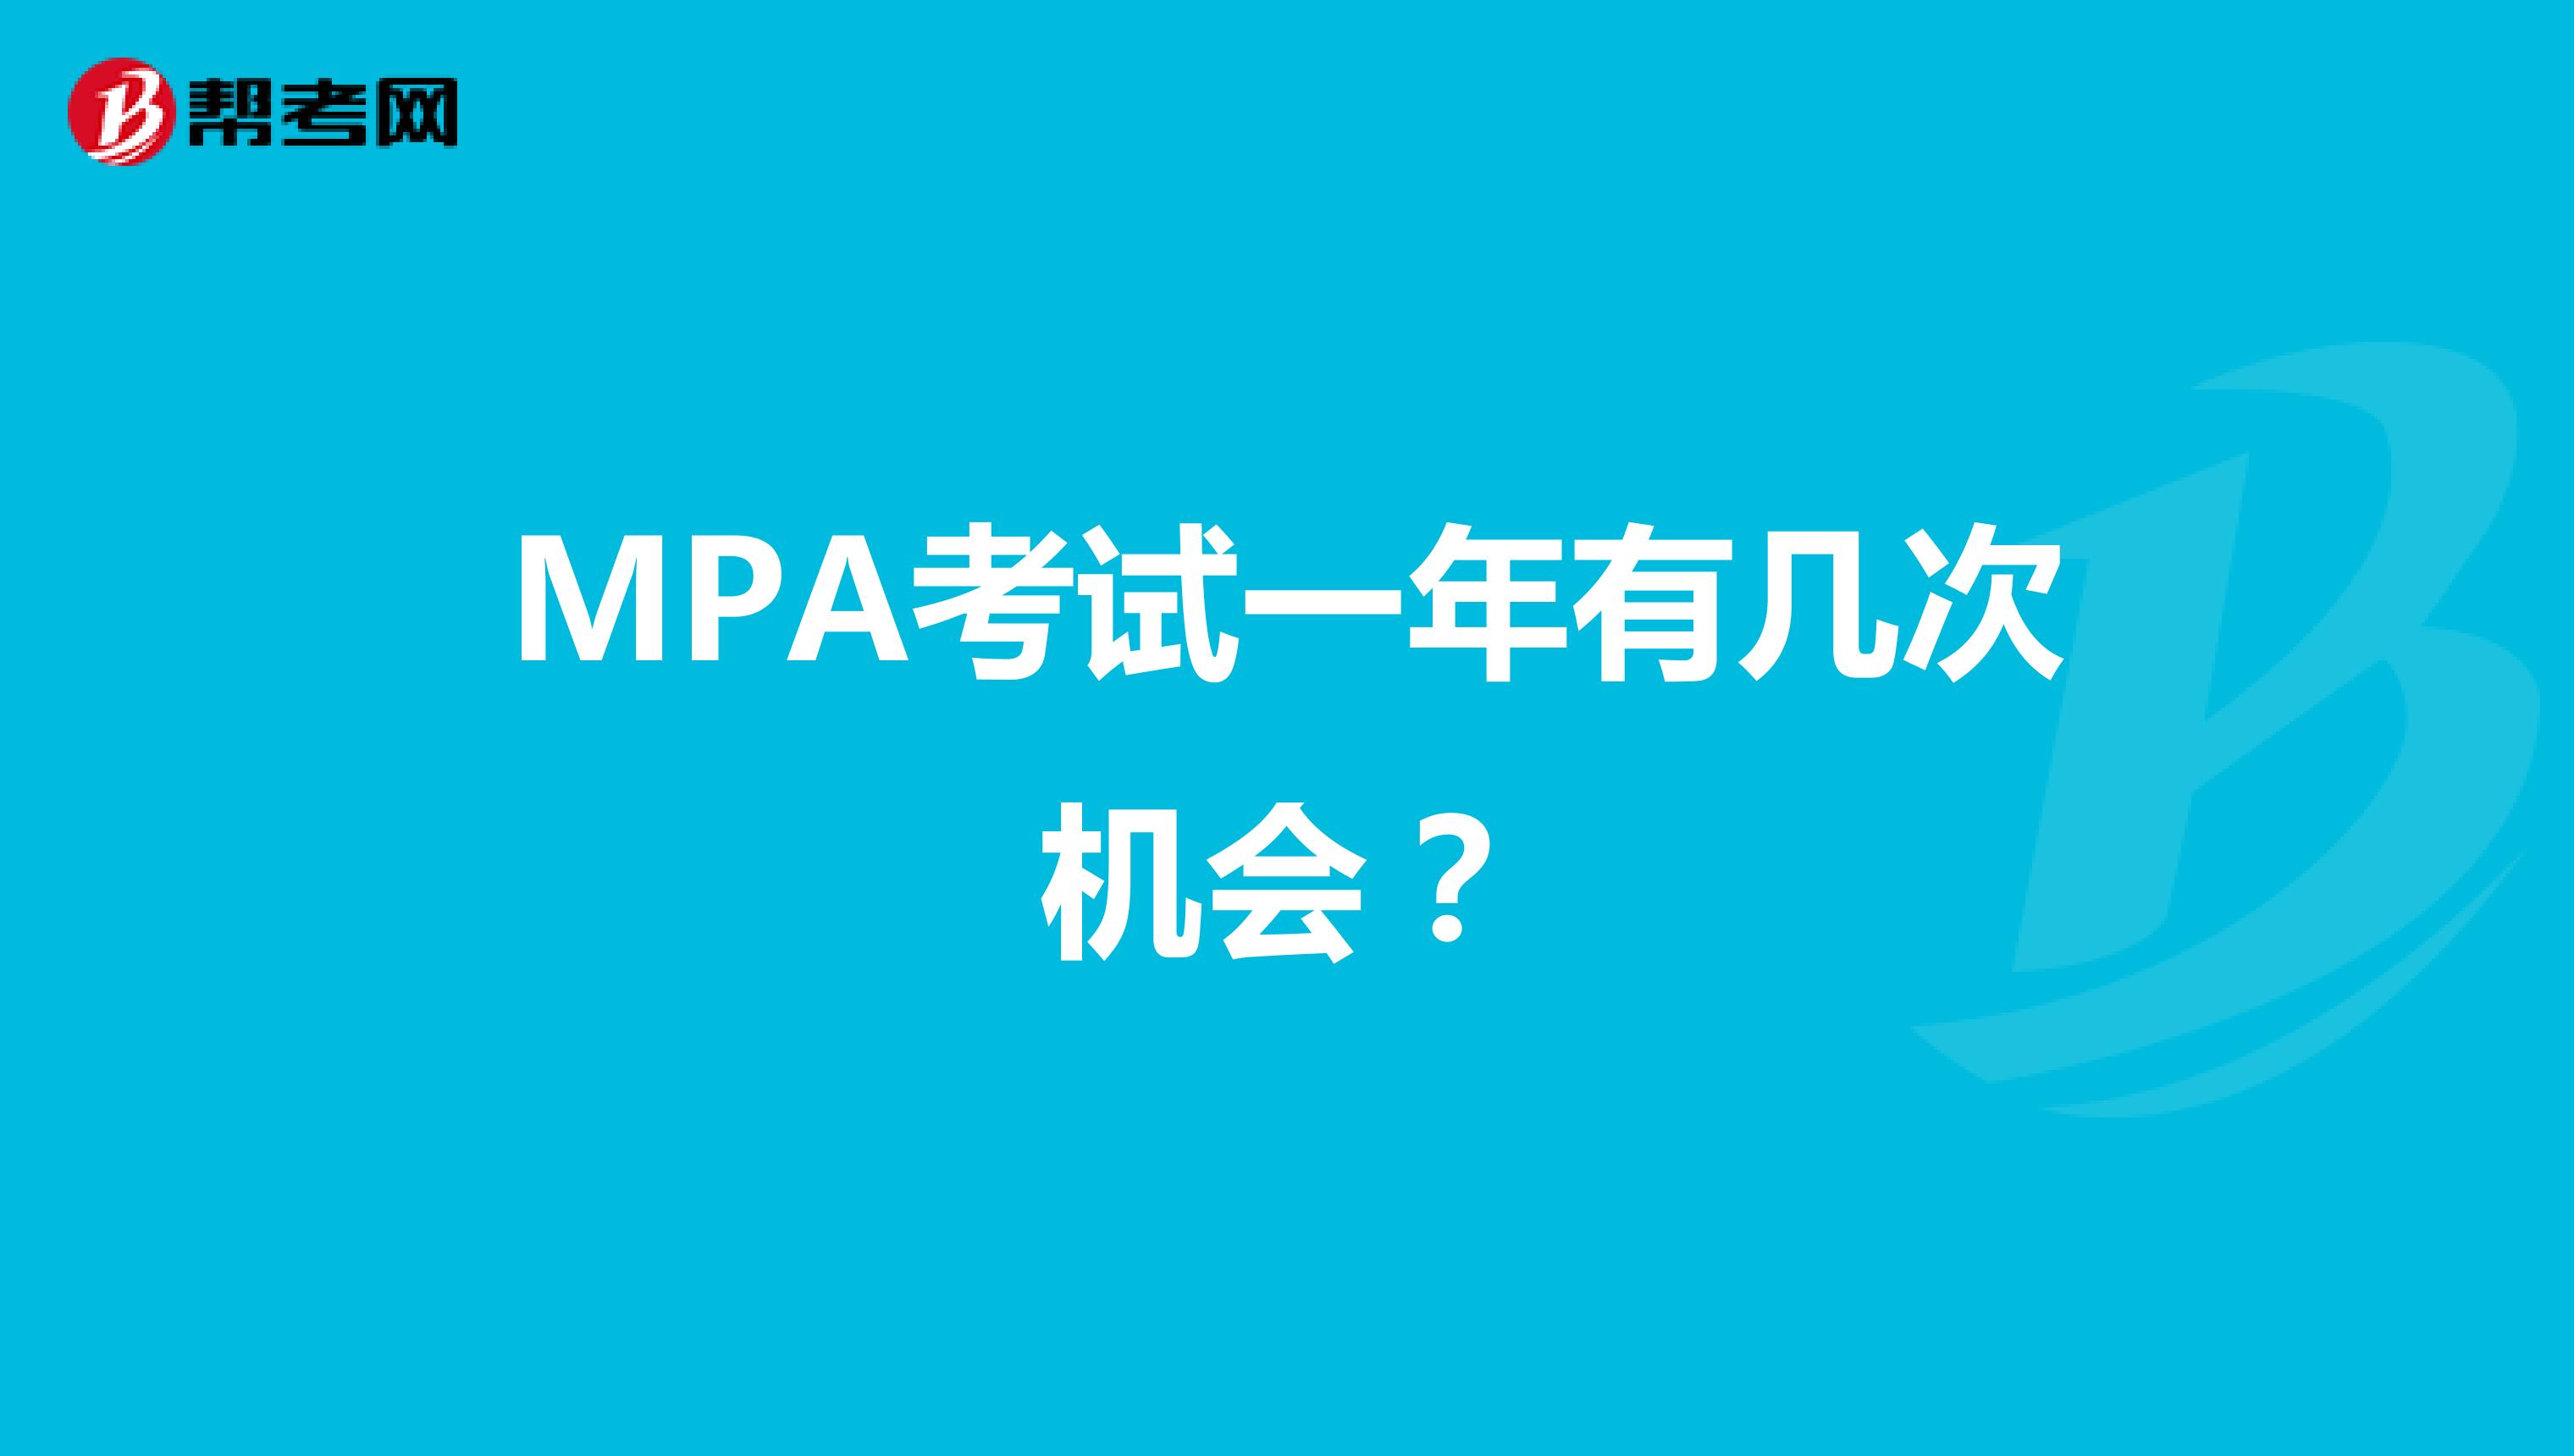 MPA考试一年有几次机会？